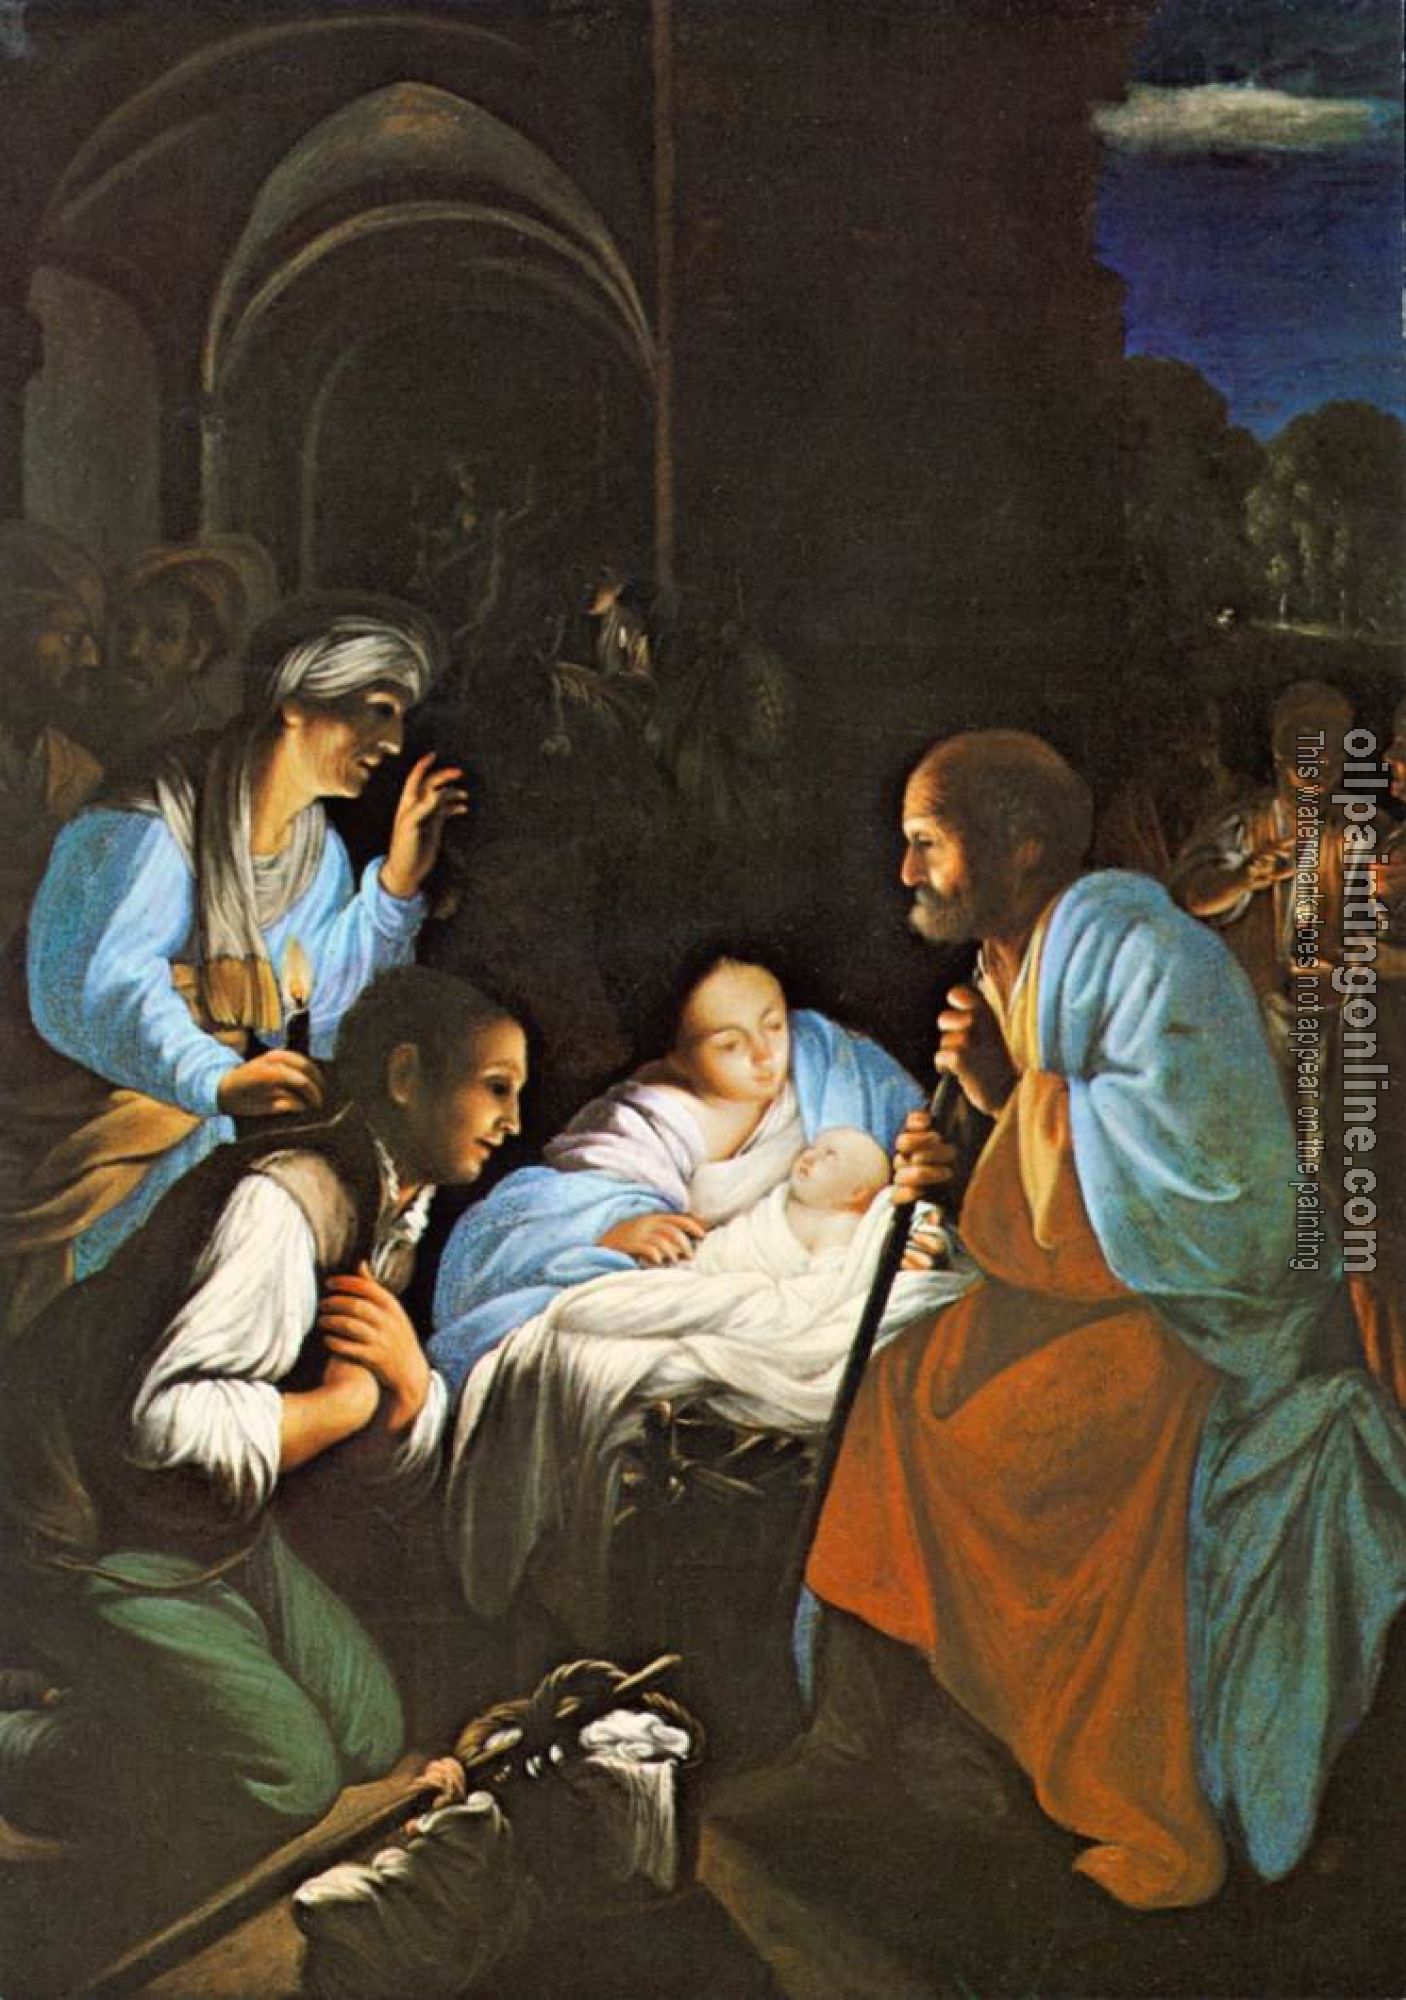 Saraceni, Carlo - The Birth of Christ